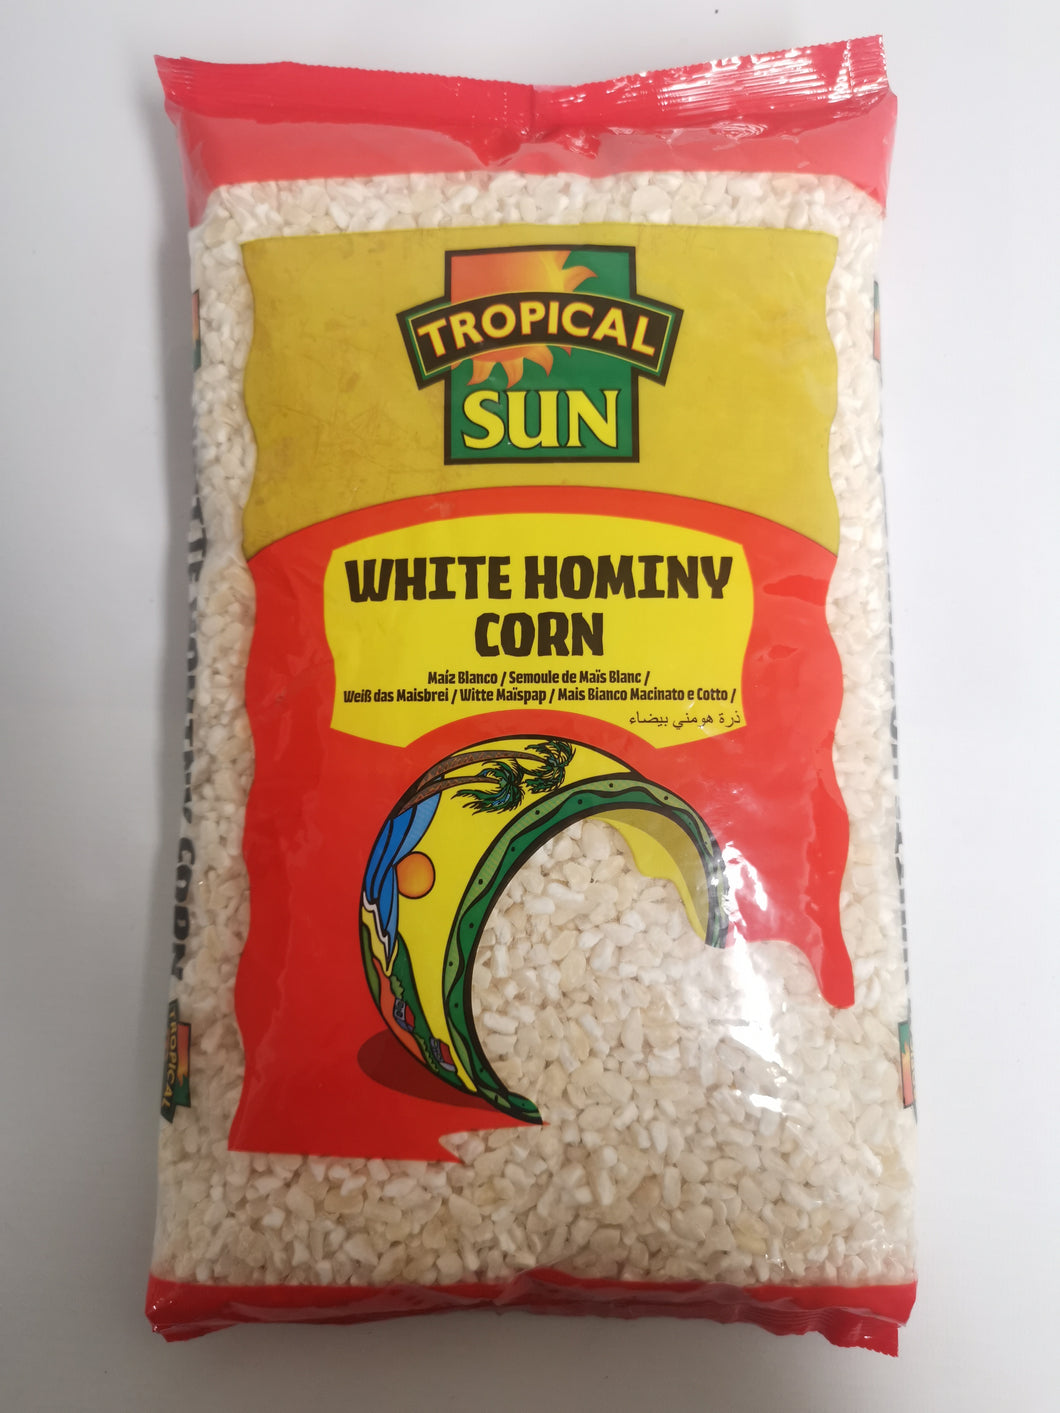 Tropical Sun White Hominy Corn